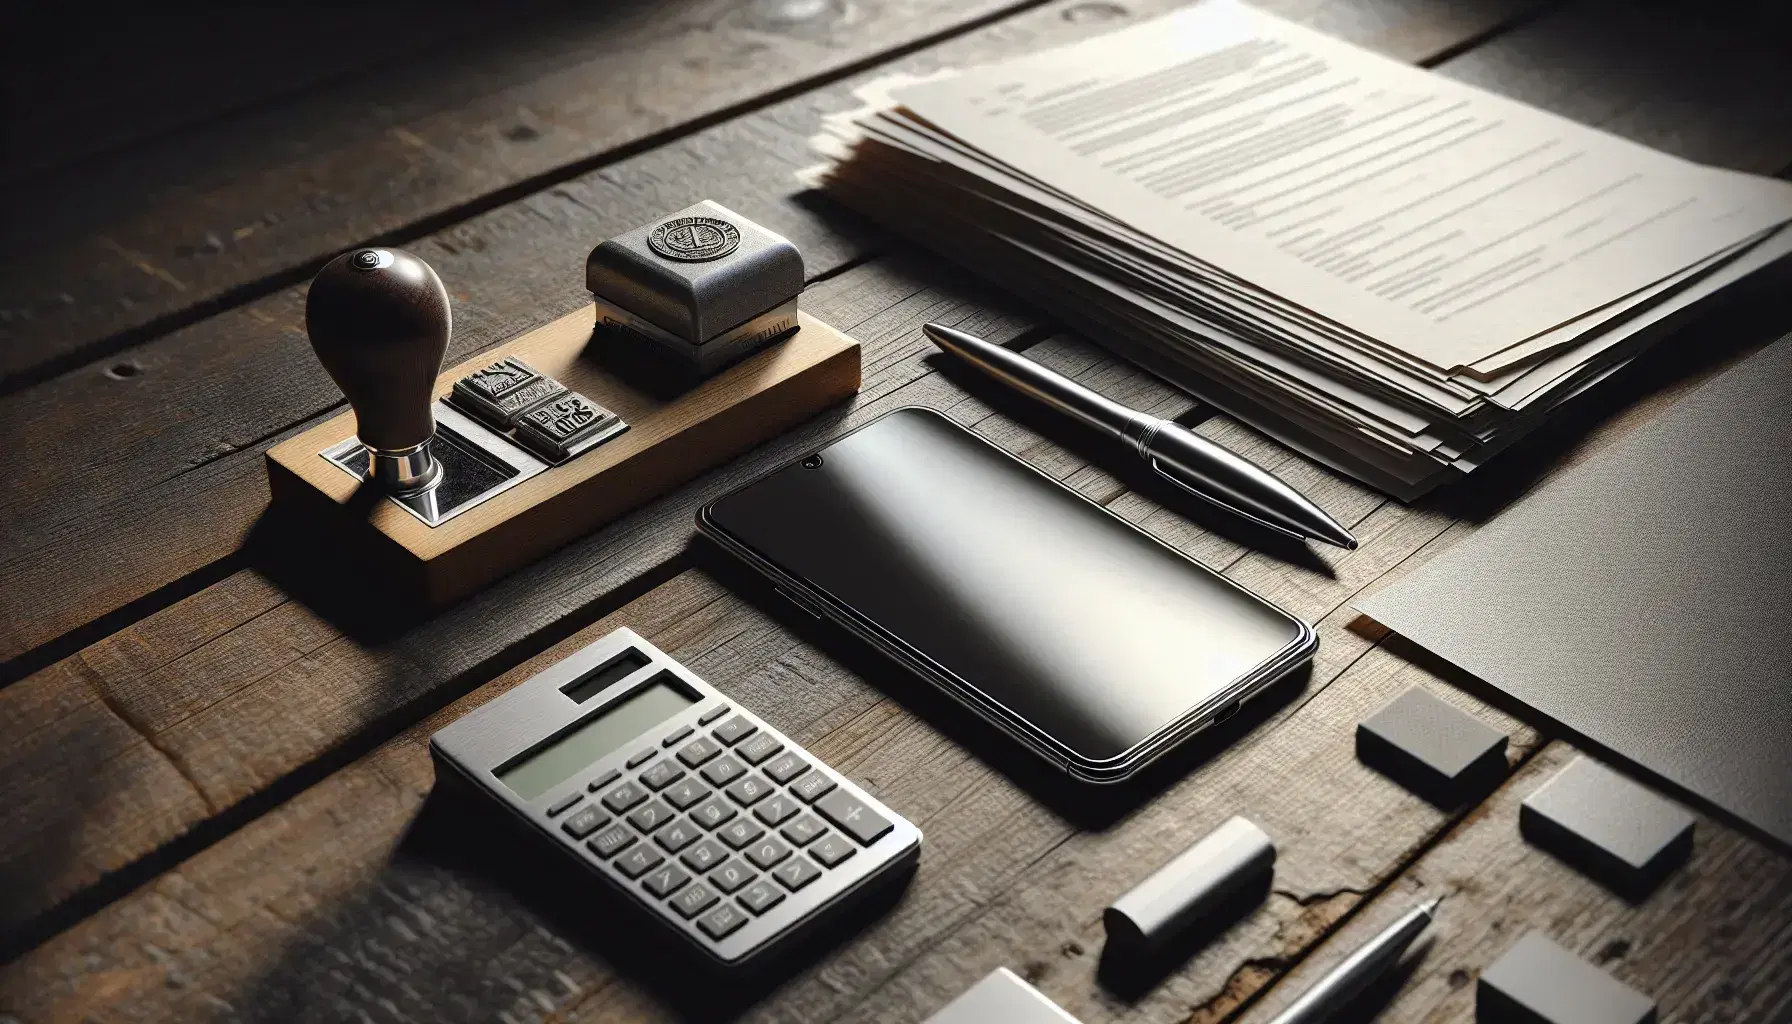 Mesa de madera oscura con papeles en blanco, bolígrafo metálico, sello de goma, almohadilla de tinta negra, calculadora apagada y smartphone boca abajo.